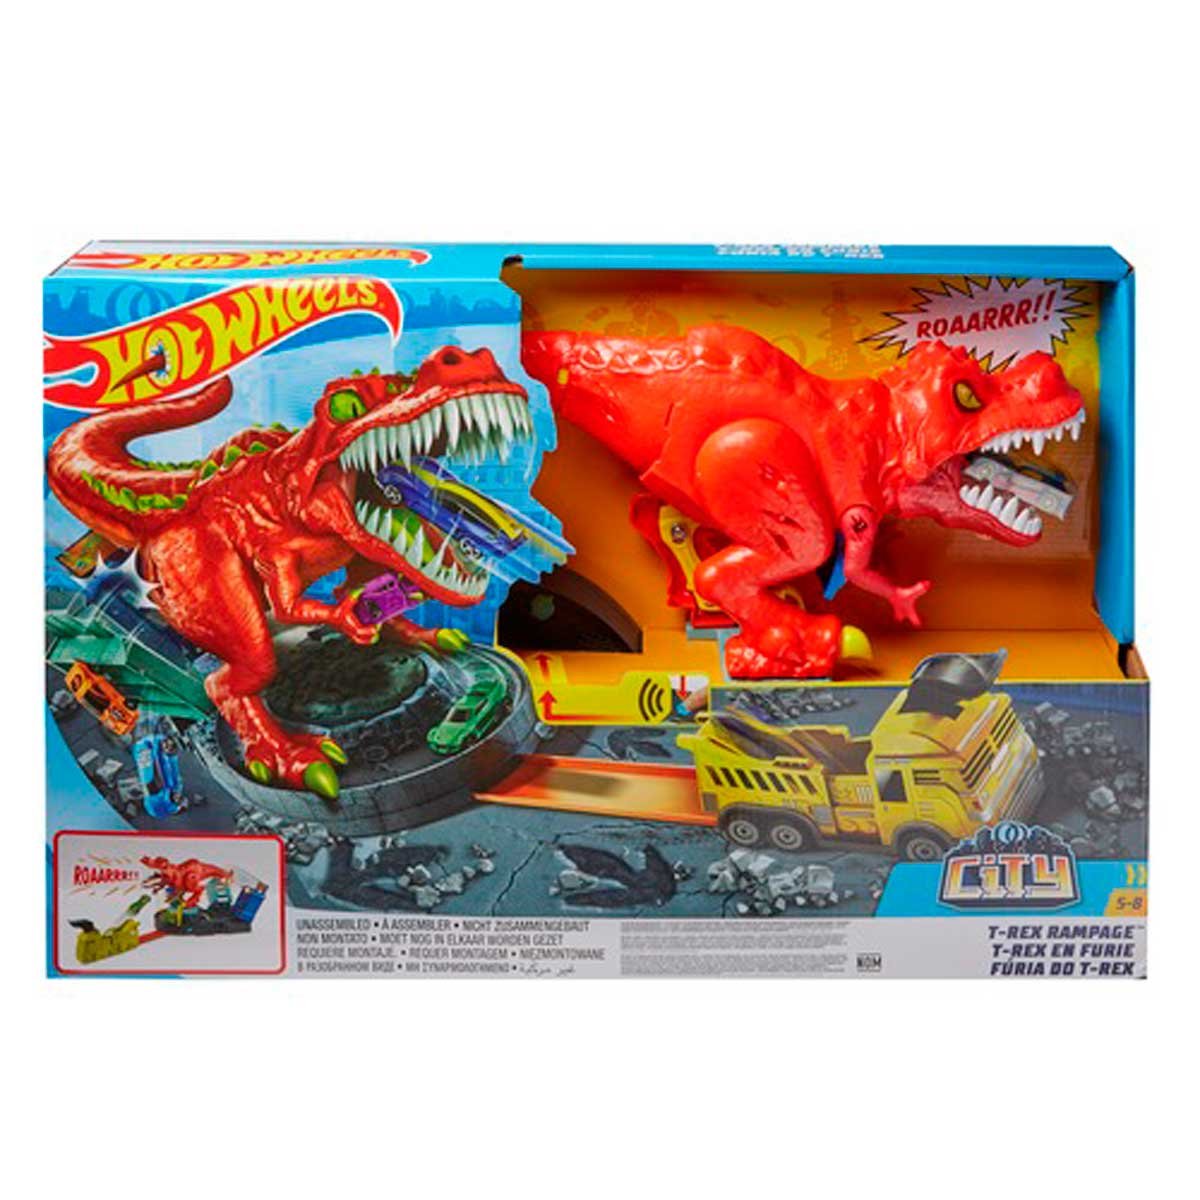 Hot Wheels City T-Rex Demoledor Mattel